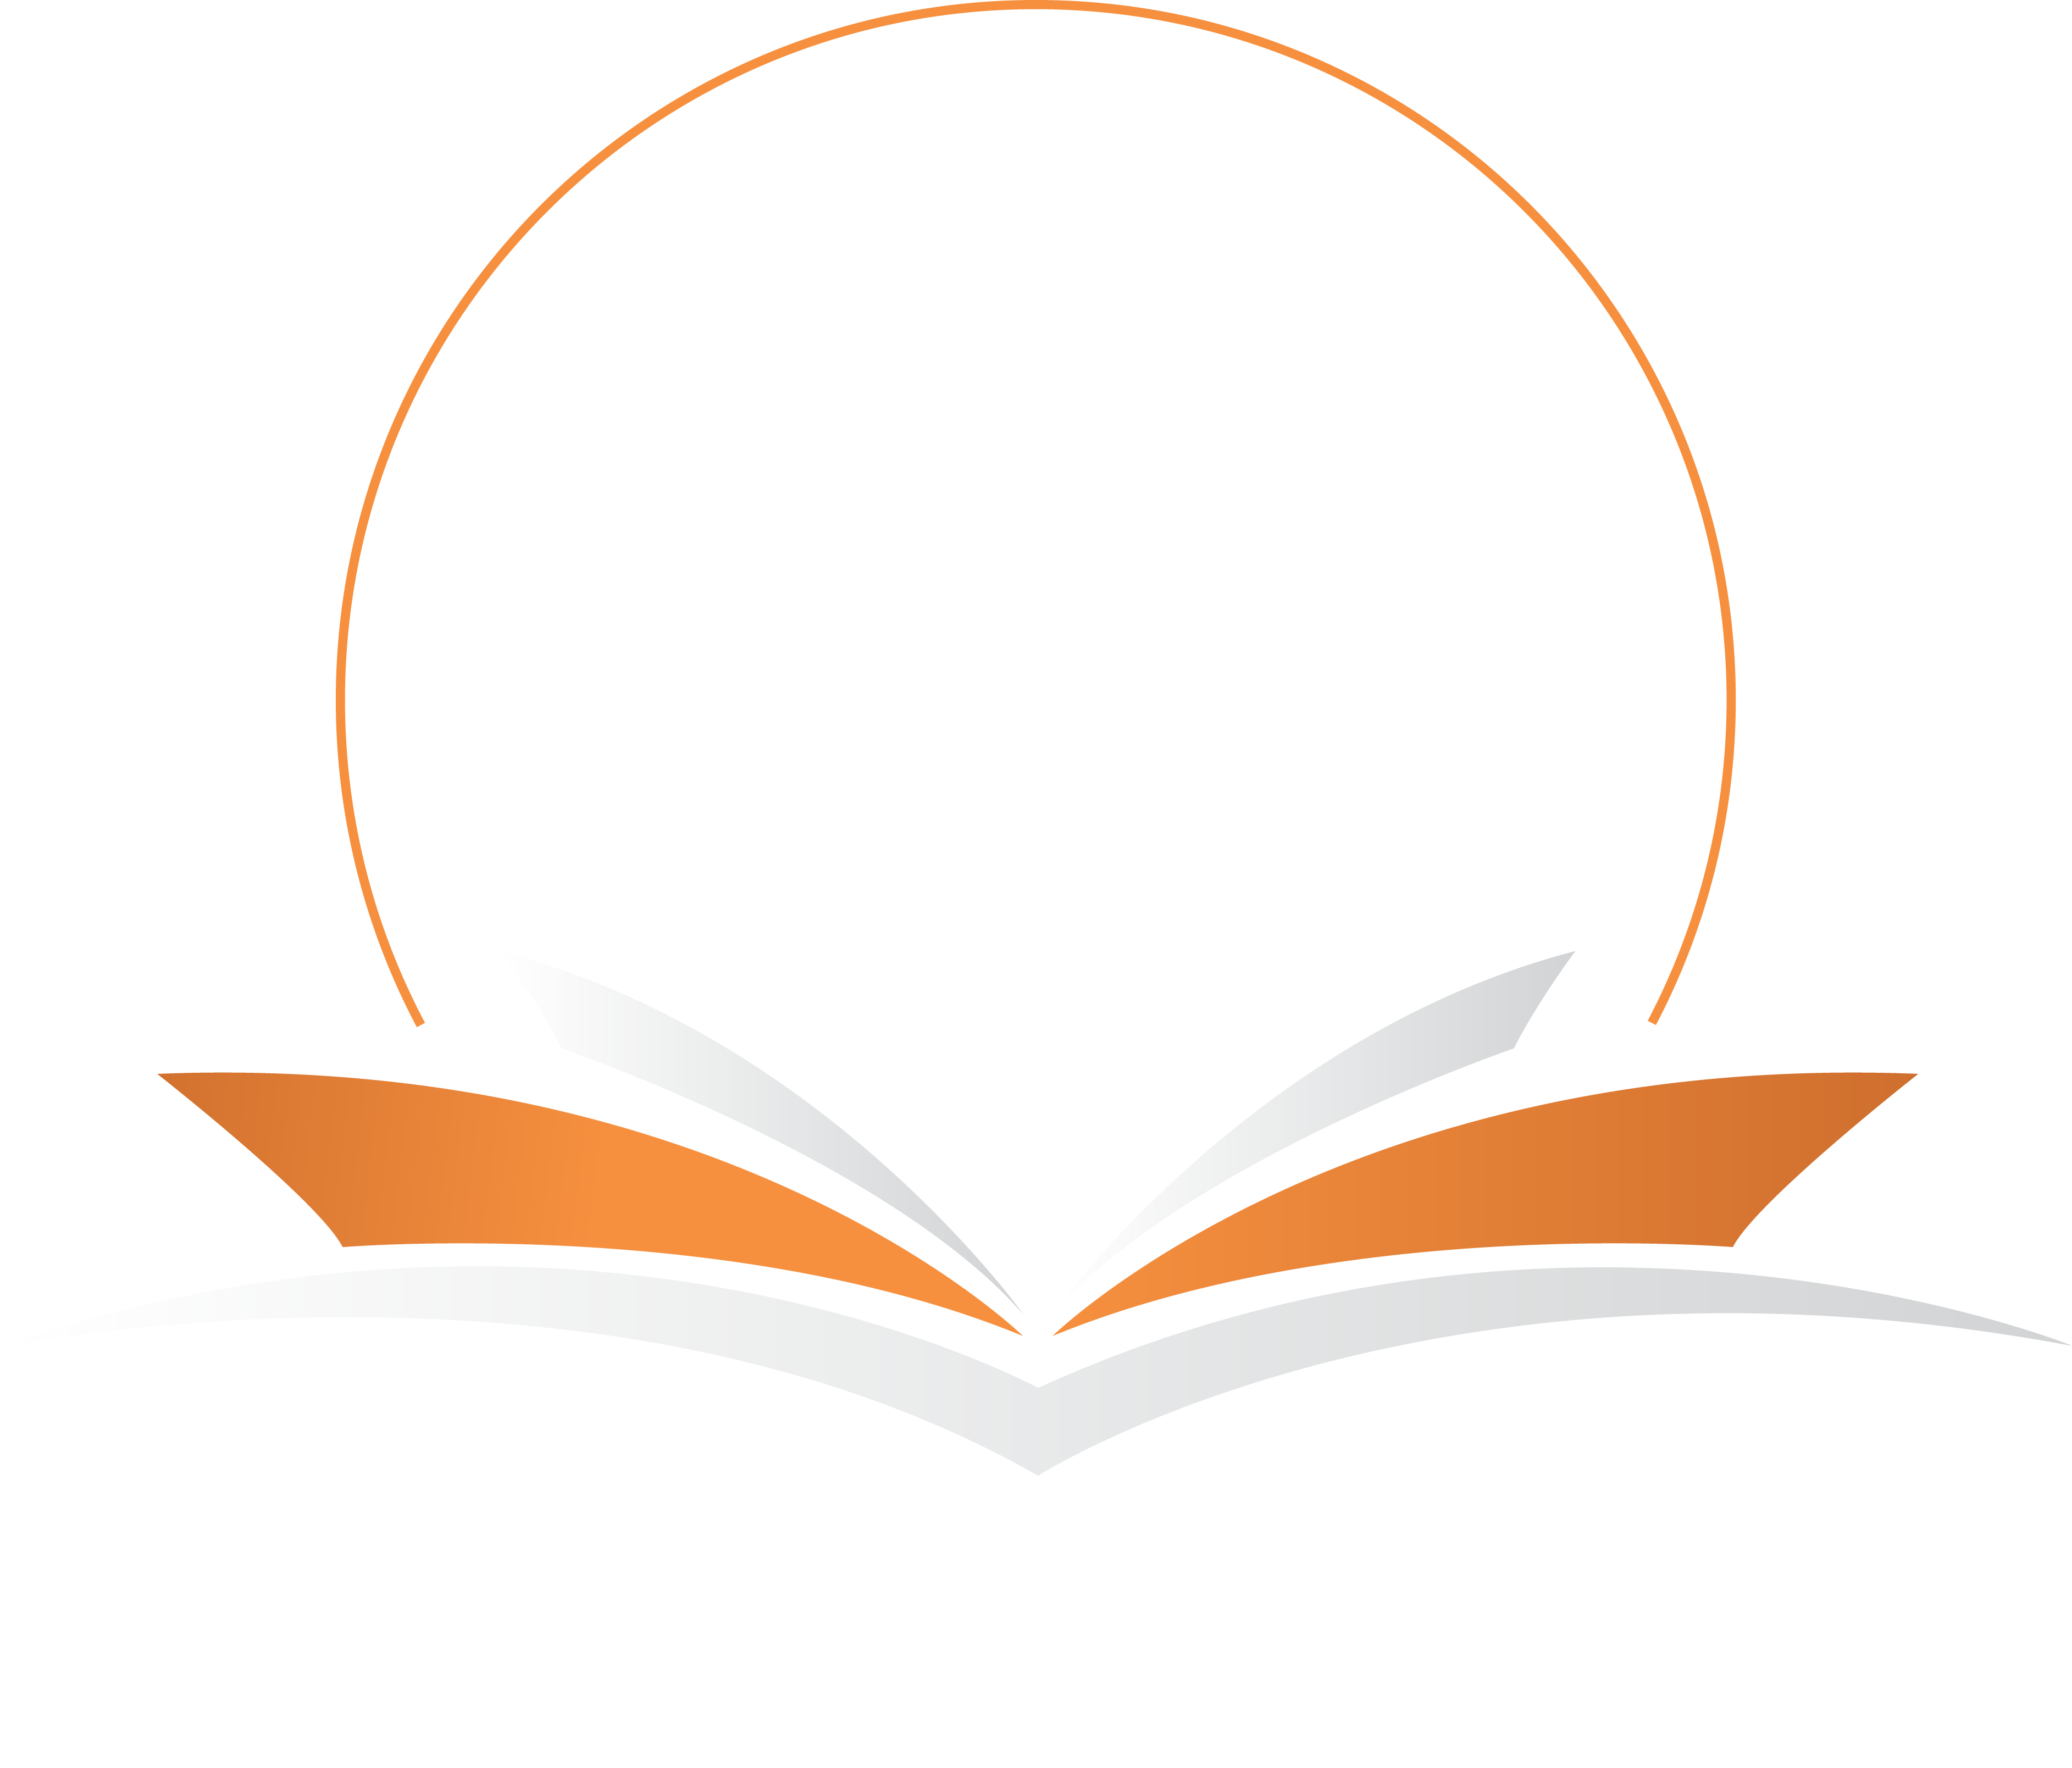 Peter A. Moscovita